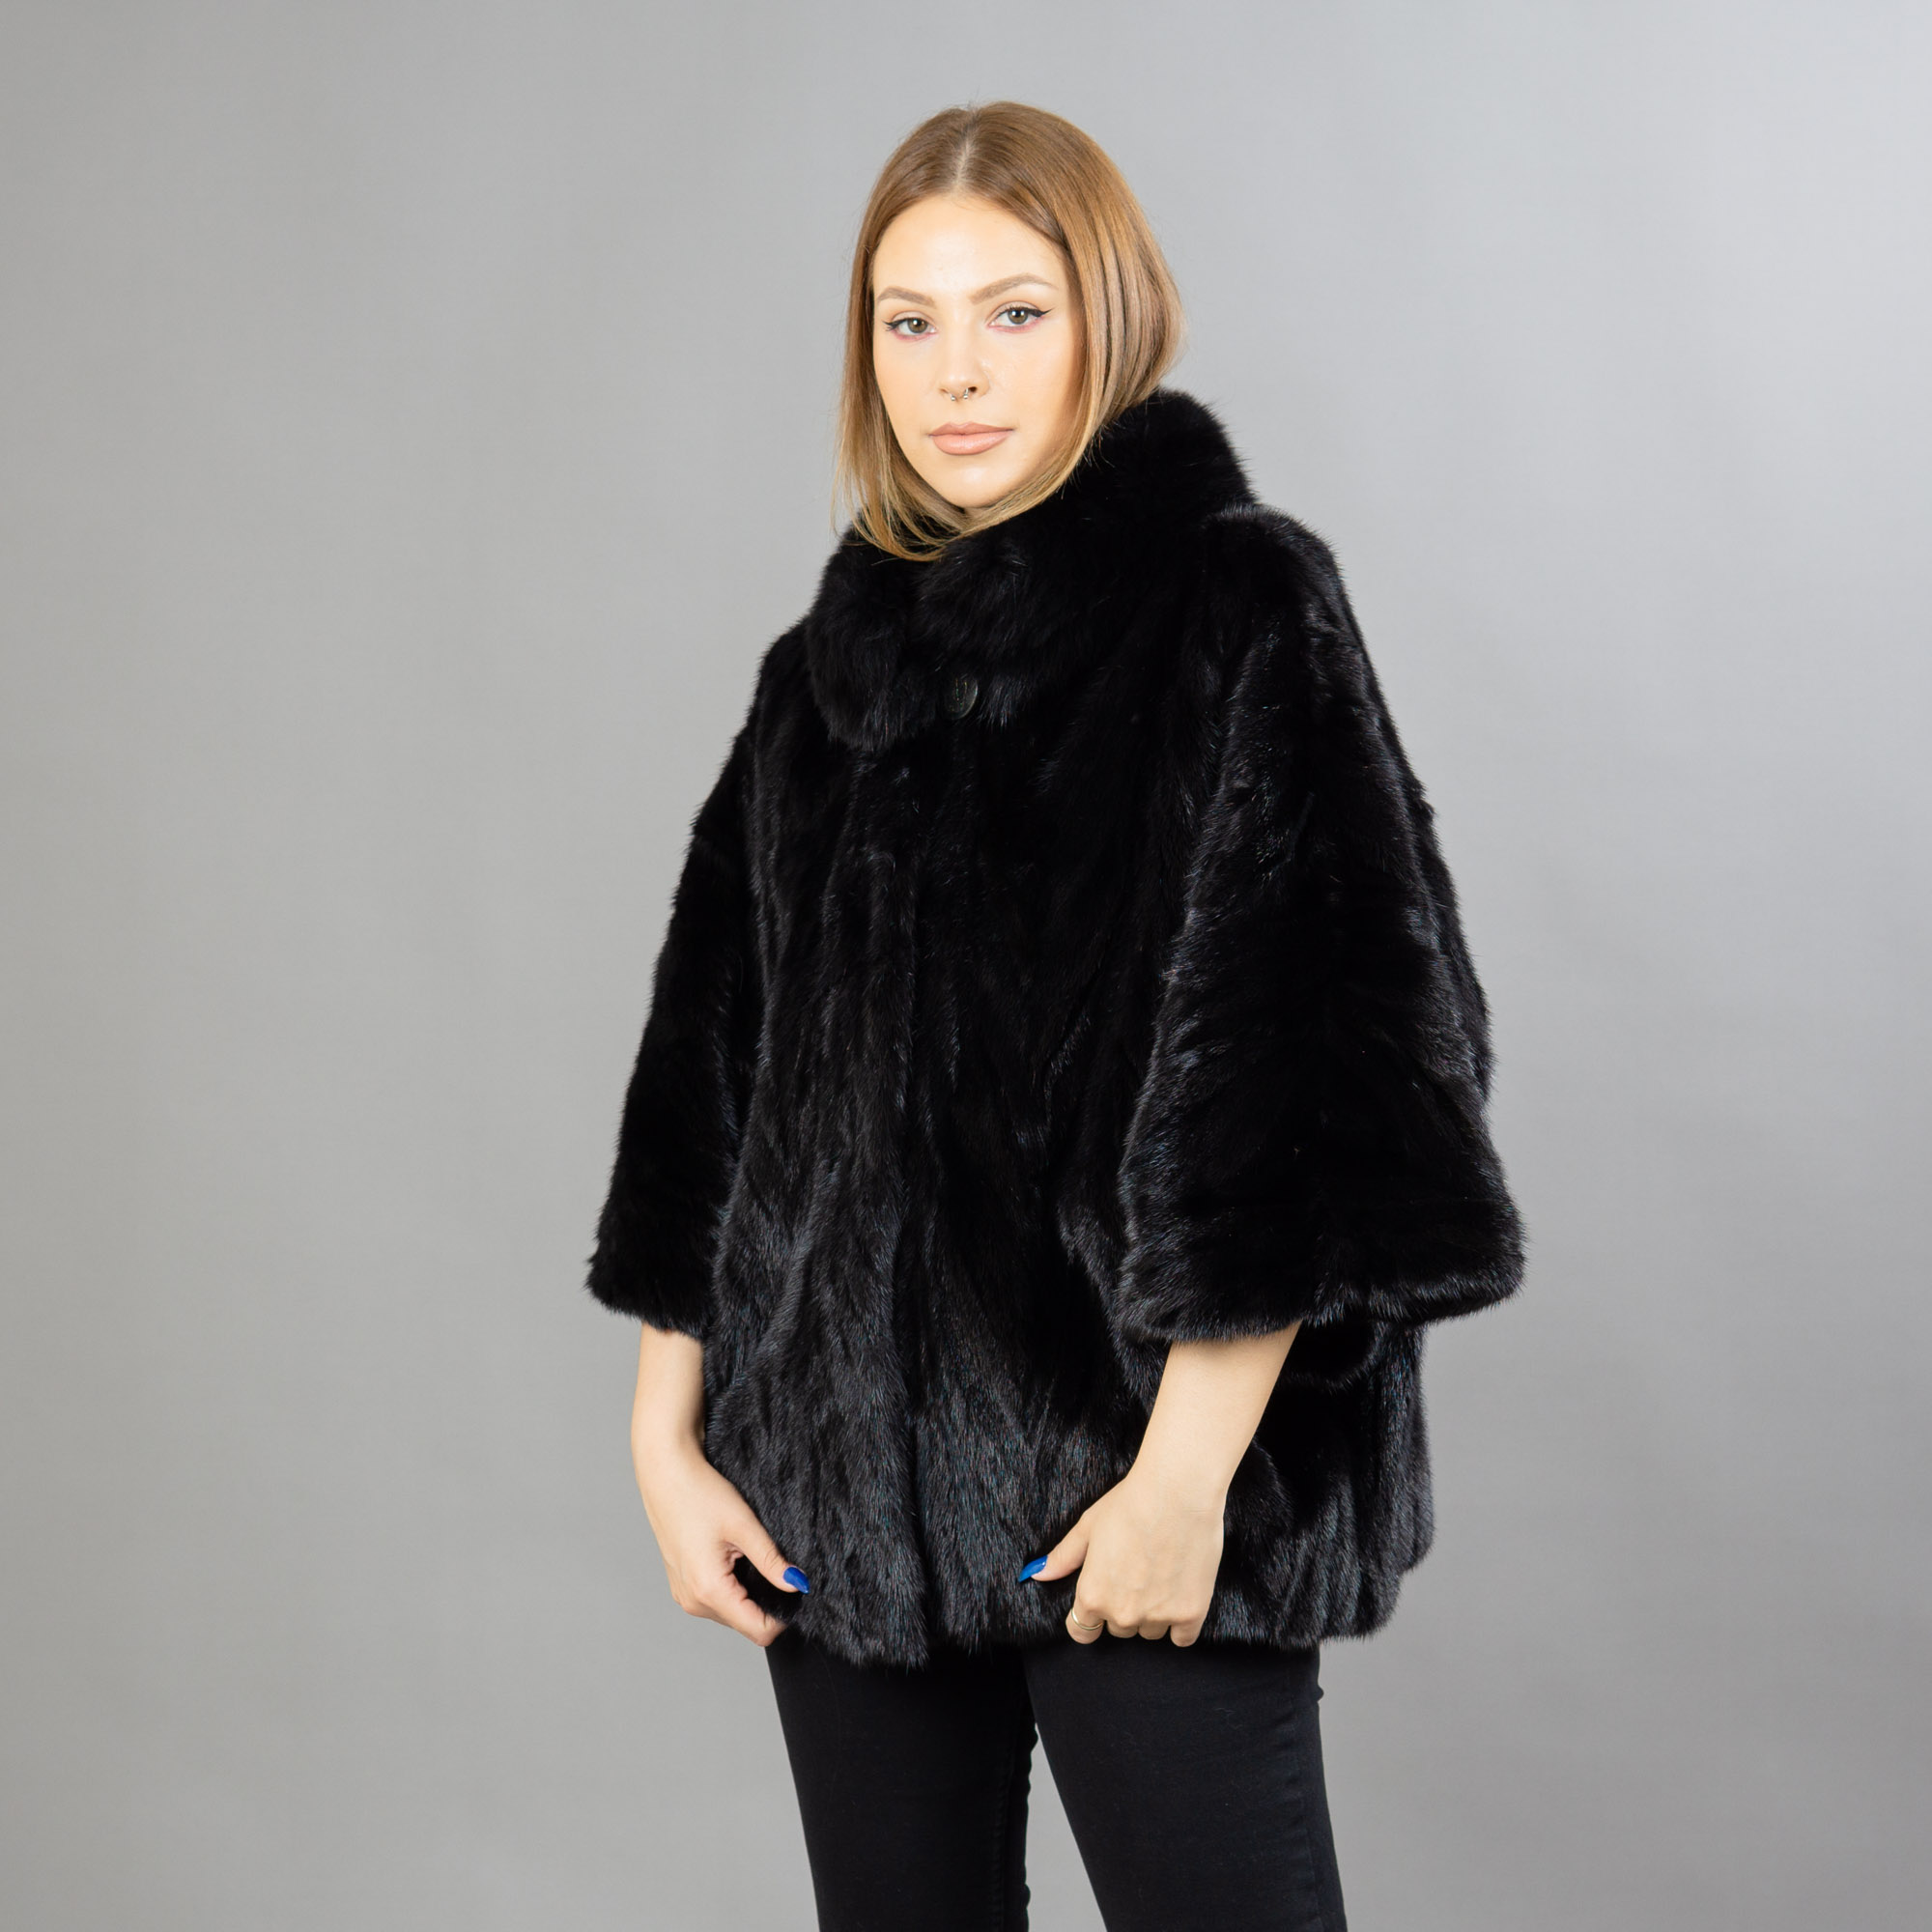 black mink fur coat with a fox fur collar